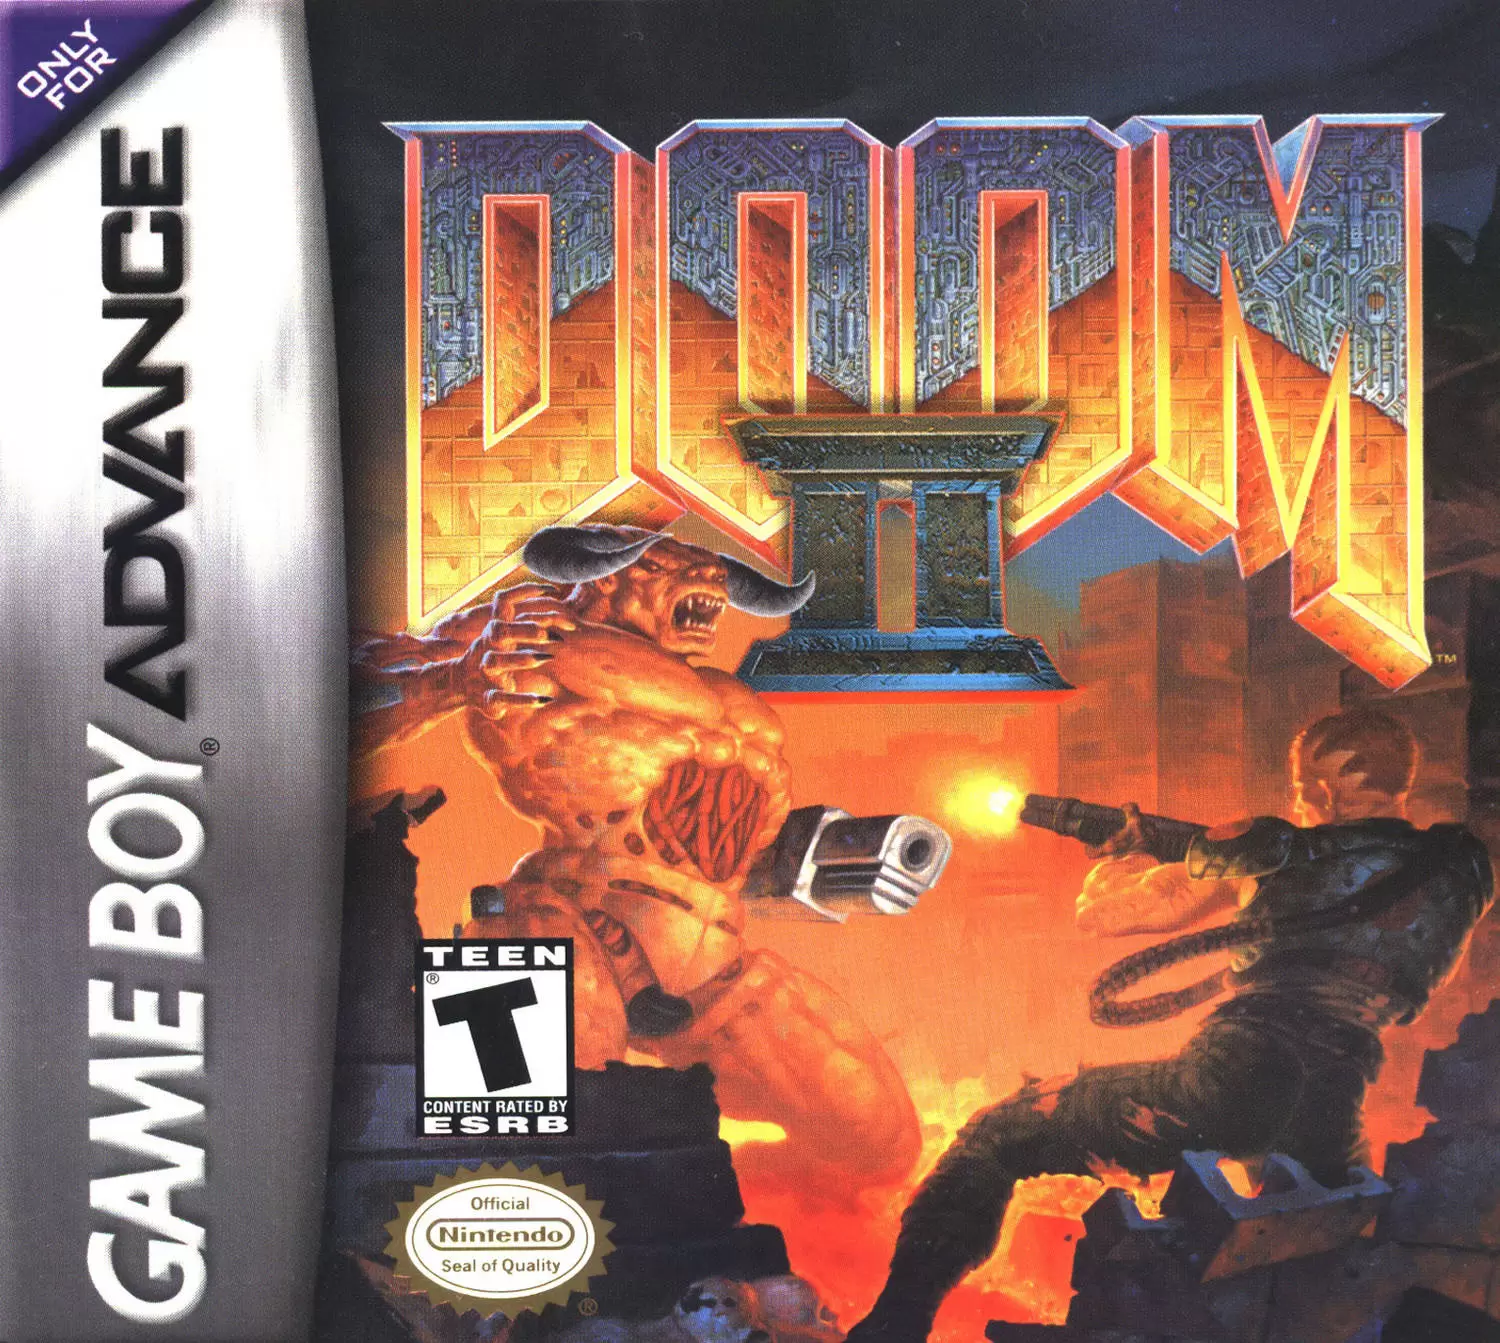 Game Boy Advance Games - Doom II: Hell on Earth